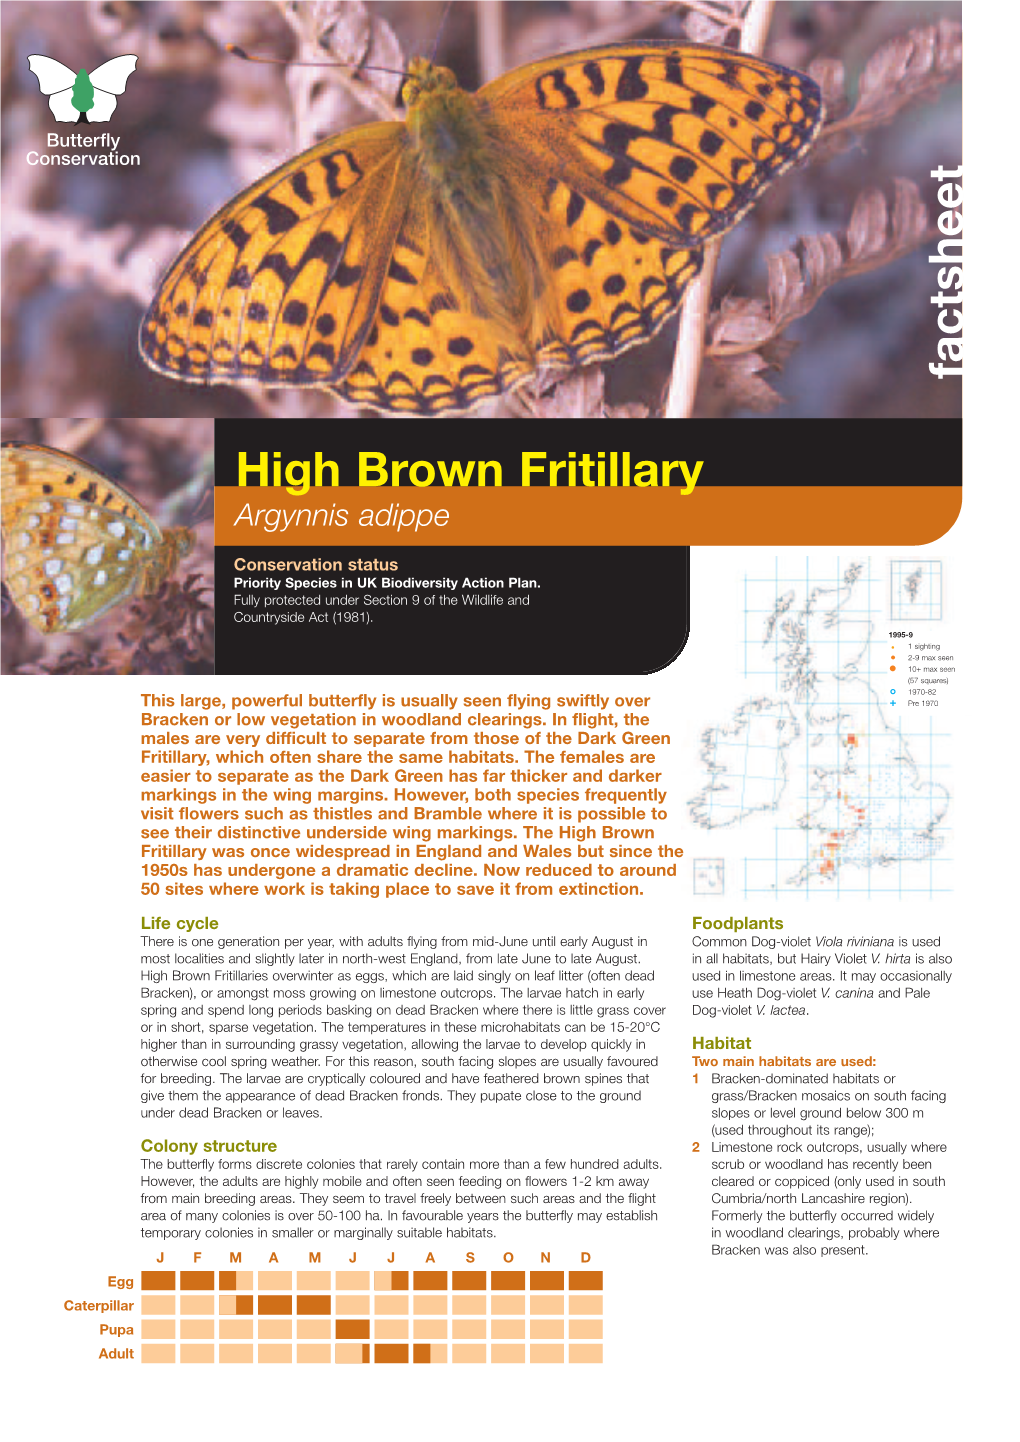 C0874 High Brown Fritillary